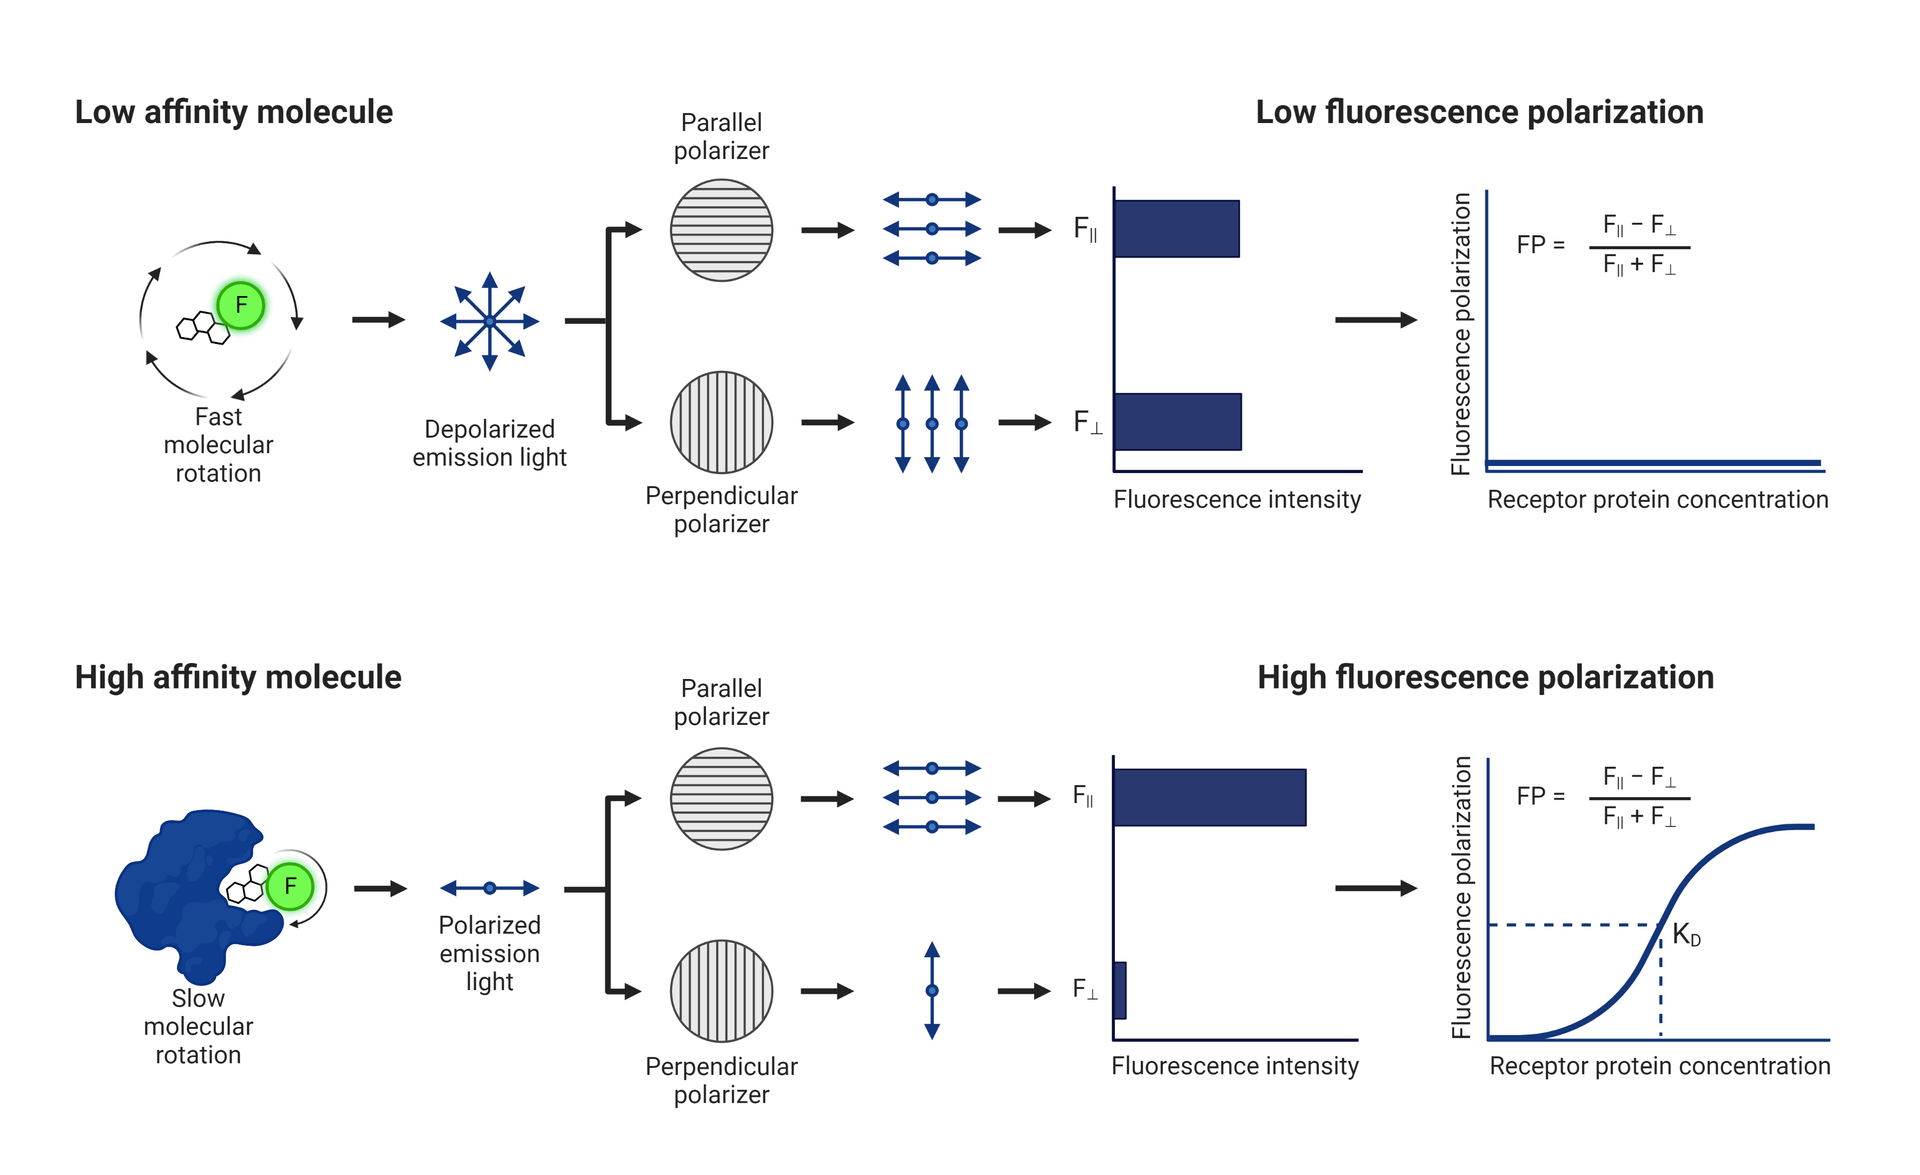 Principle of a standard fluorescent polarization assay